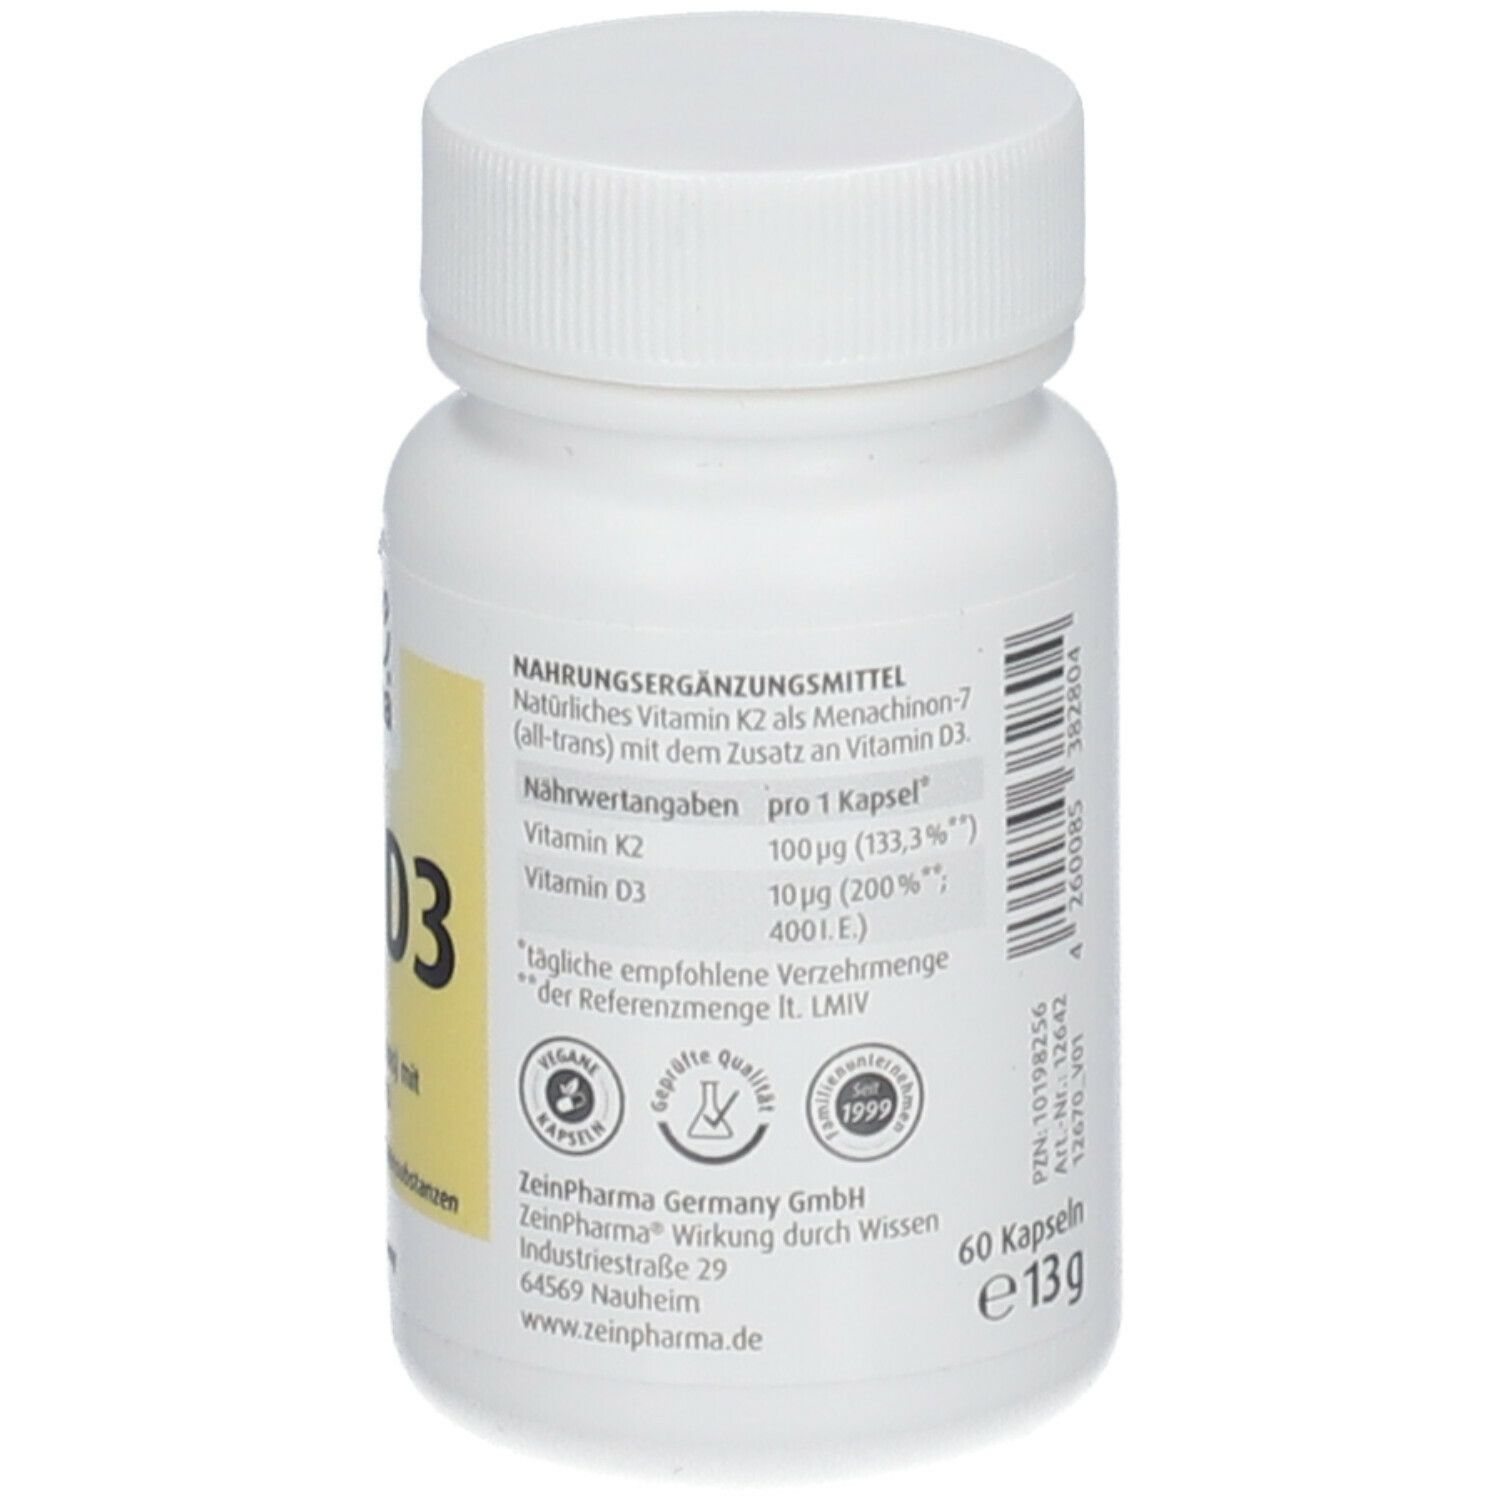 ZeinPharma® Vitamin K2 plus D3 Kapseln